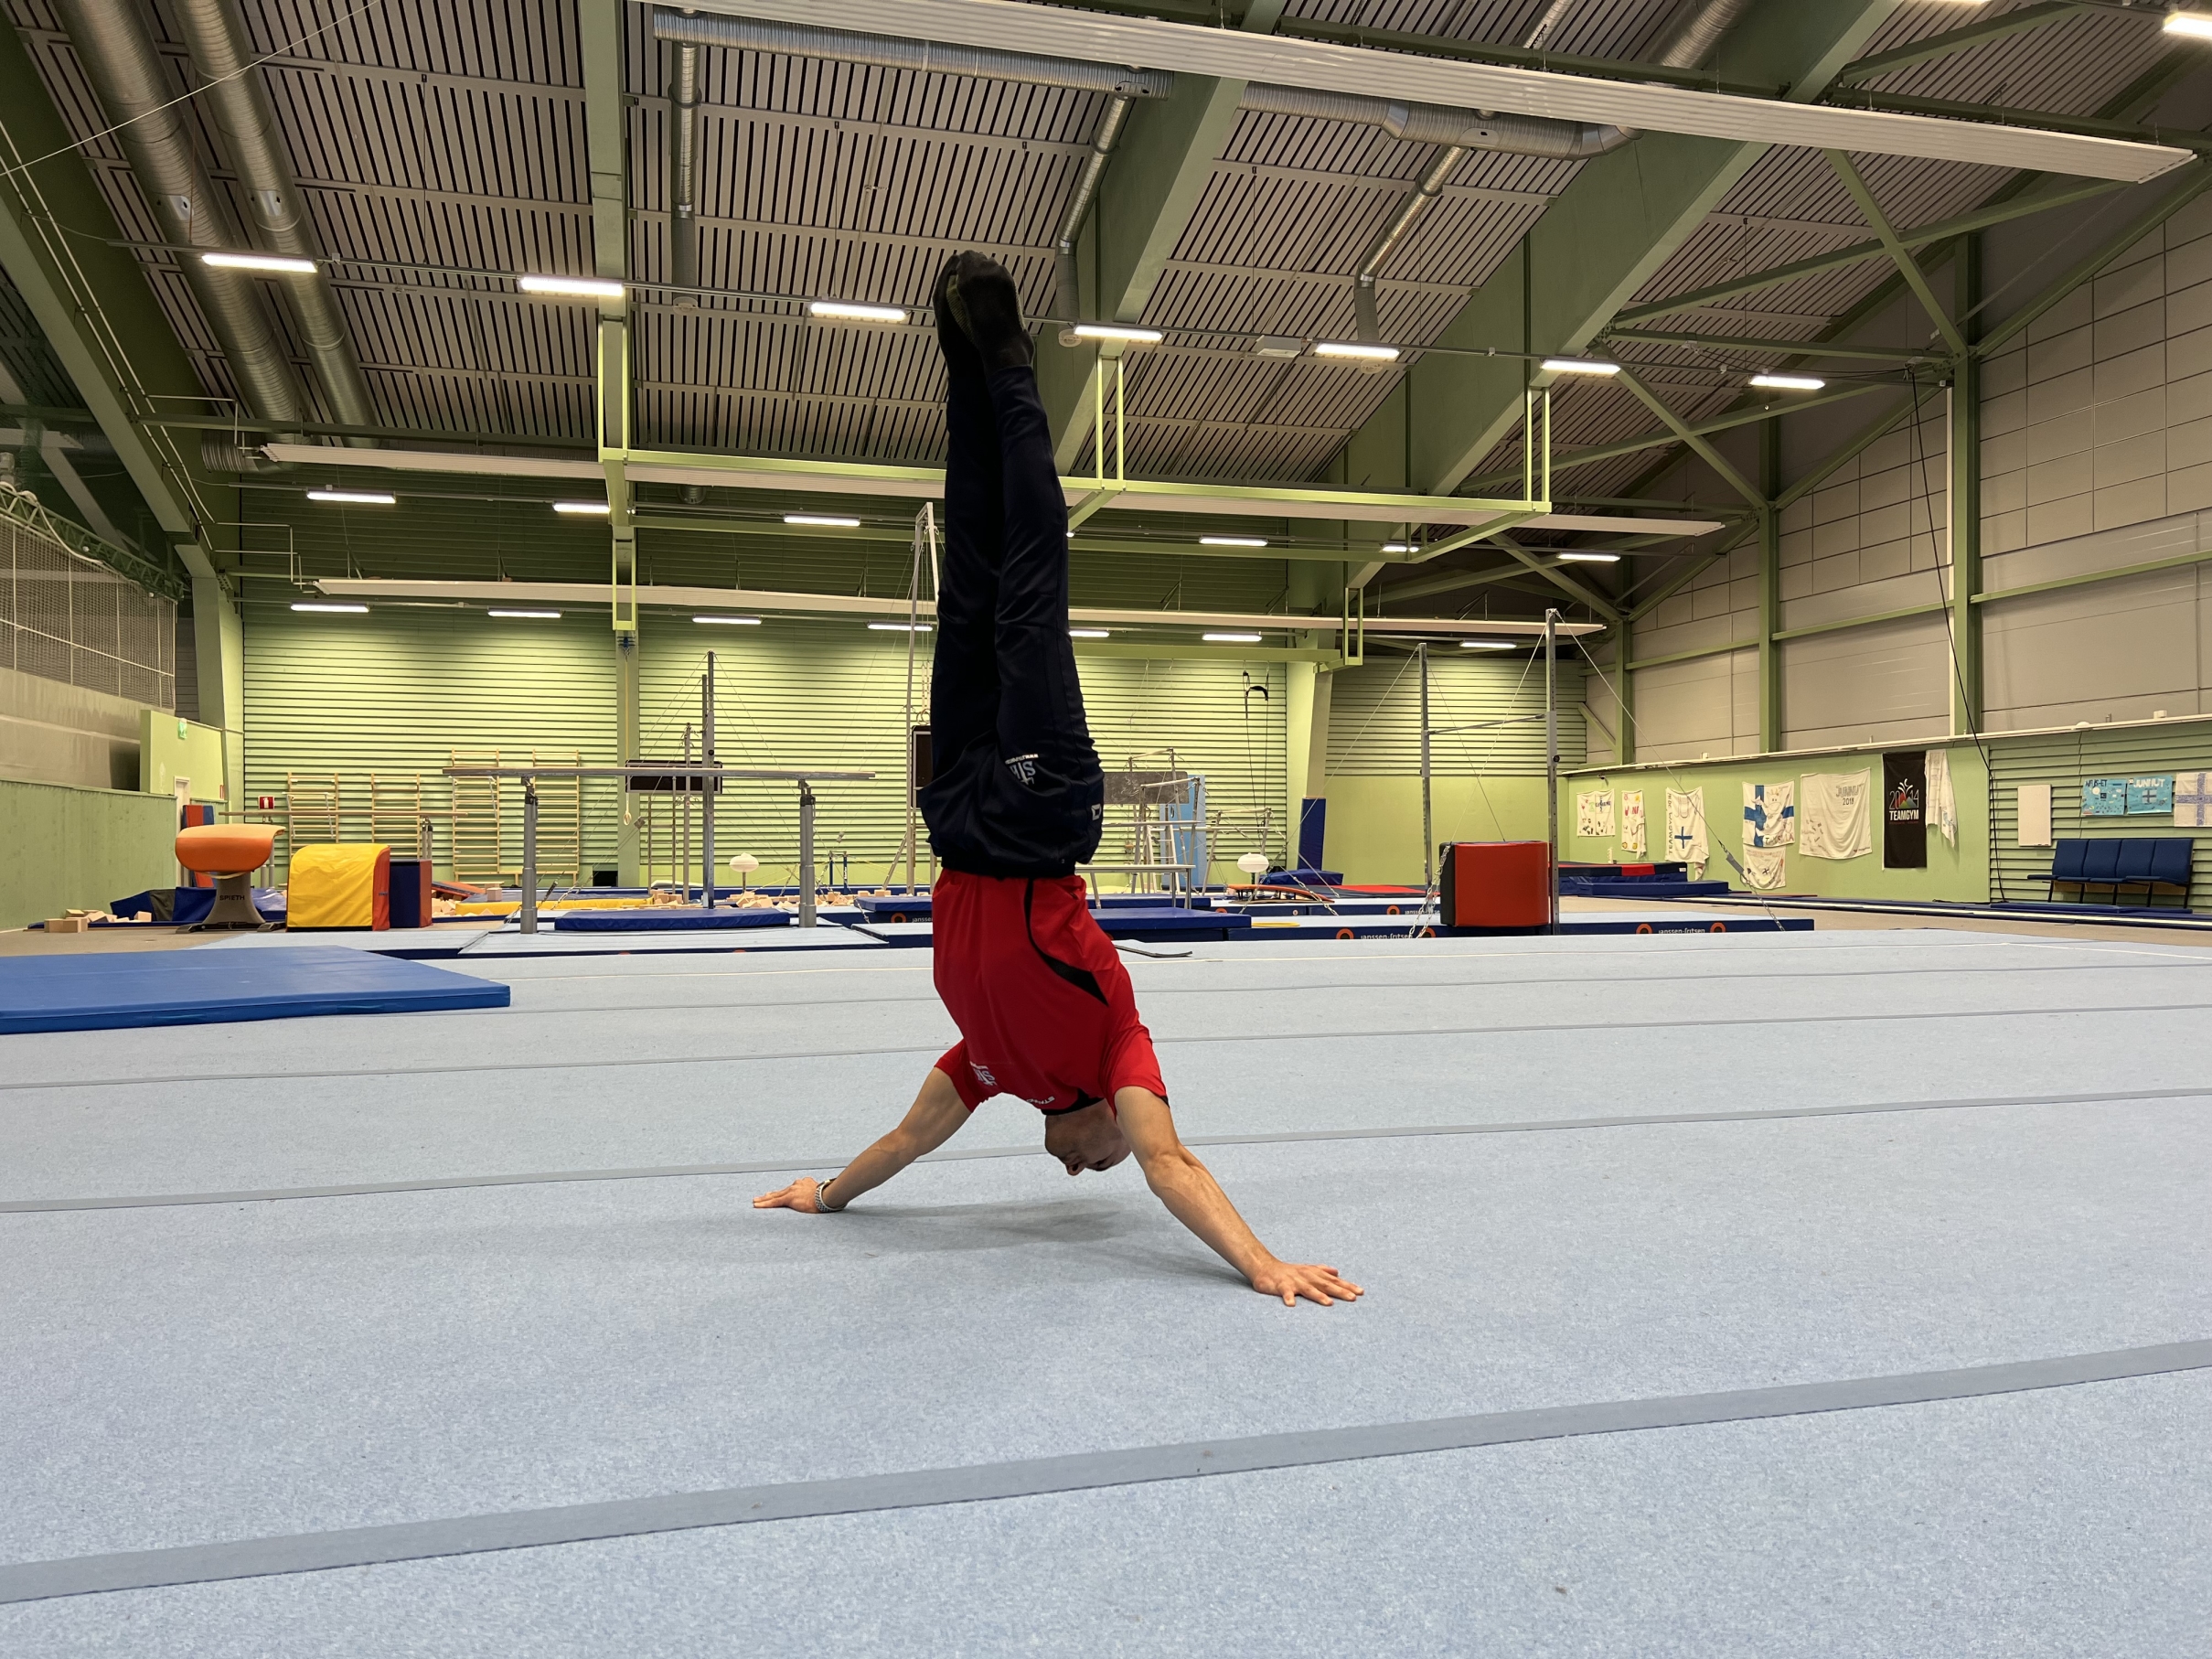 Stefan Kolimechkov performing the Japanese handstand at the Gymnastics Centre in Vierumaki, Finland